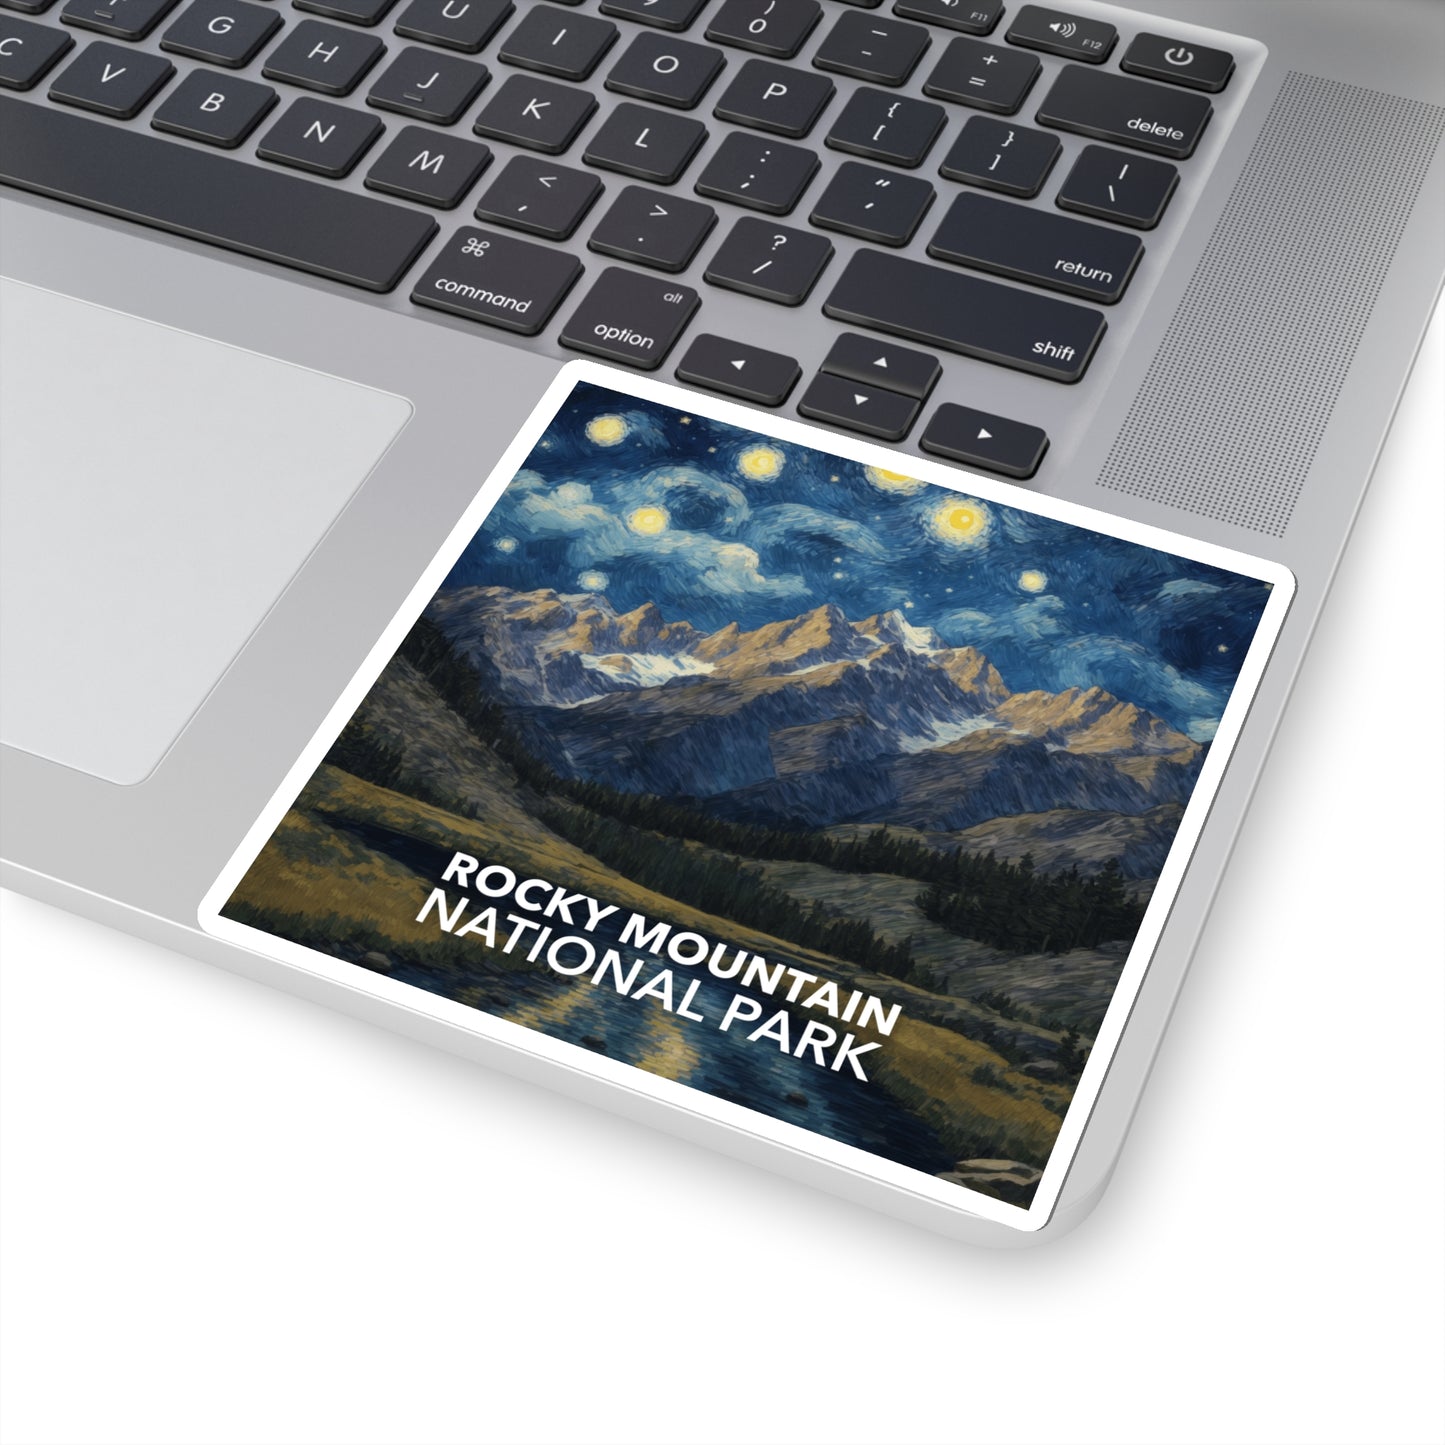 Rocky Mountain National Park Sticker - The Starry Night